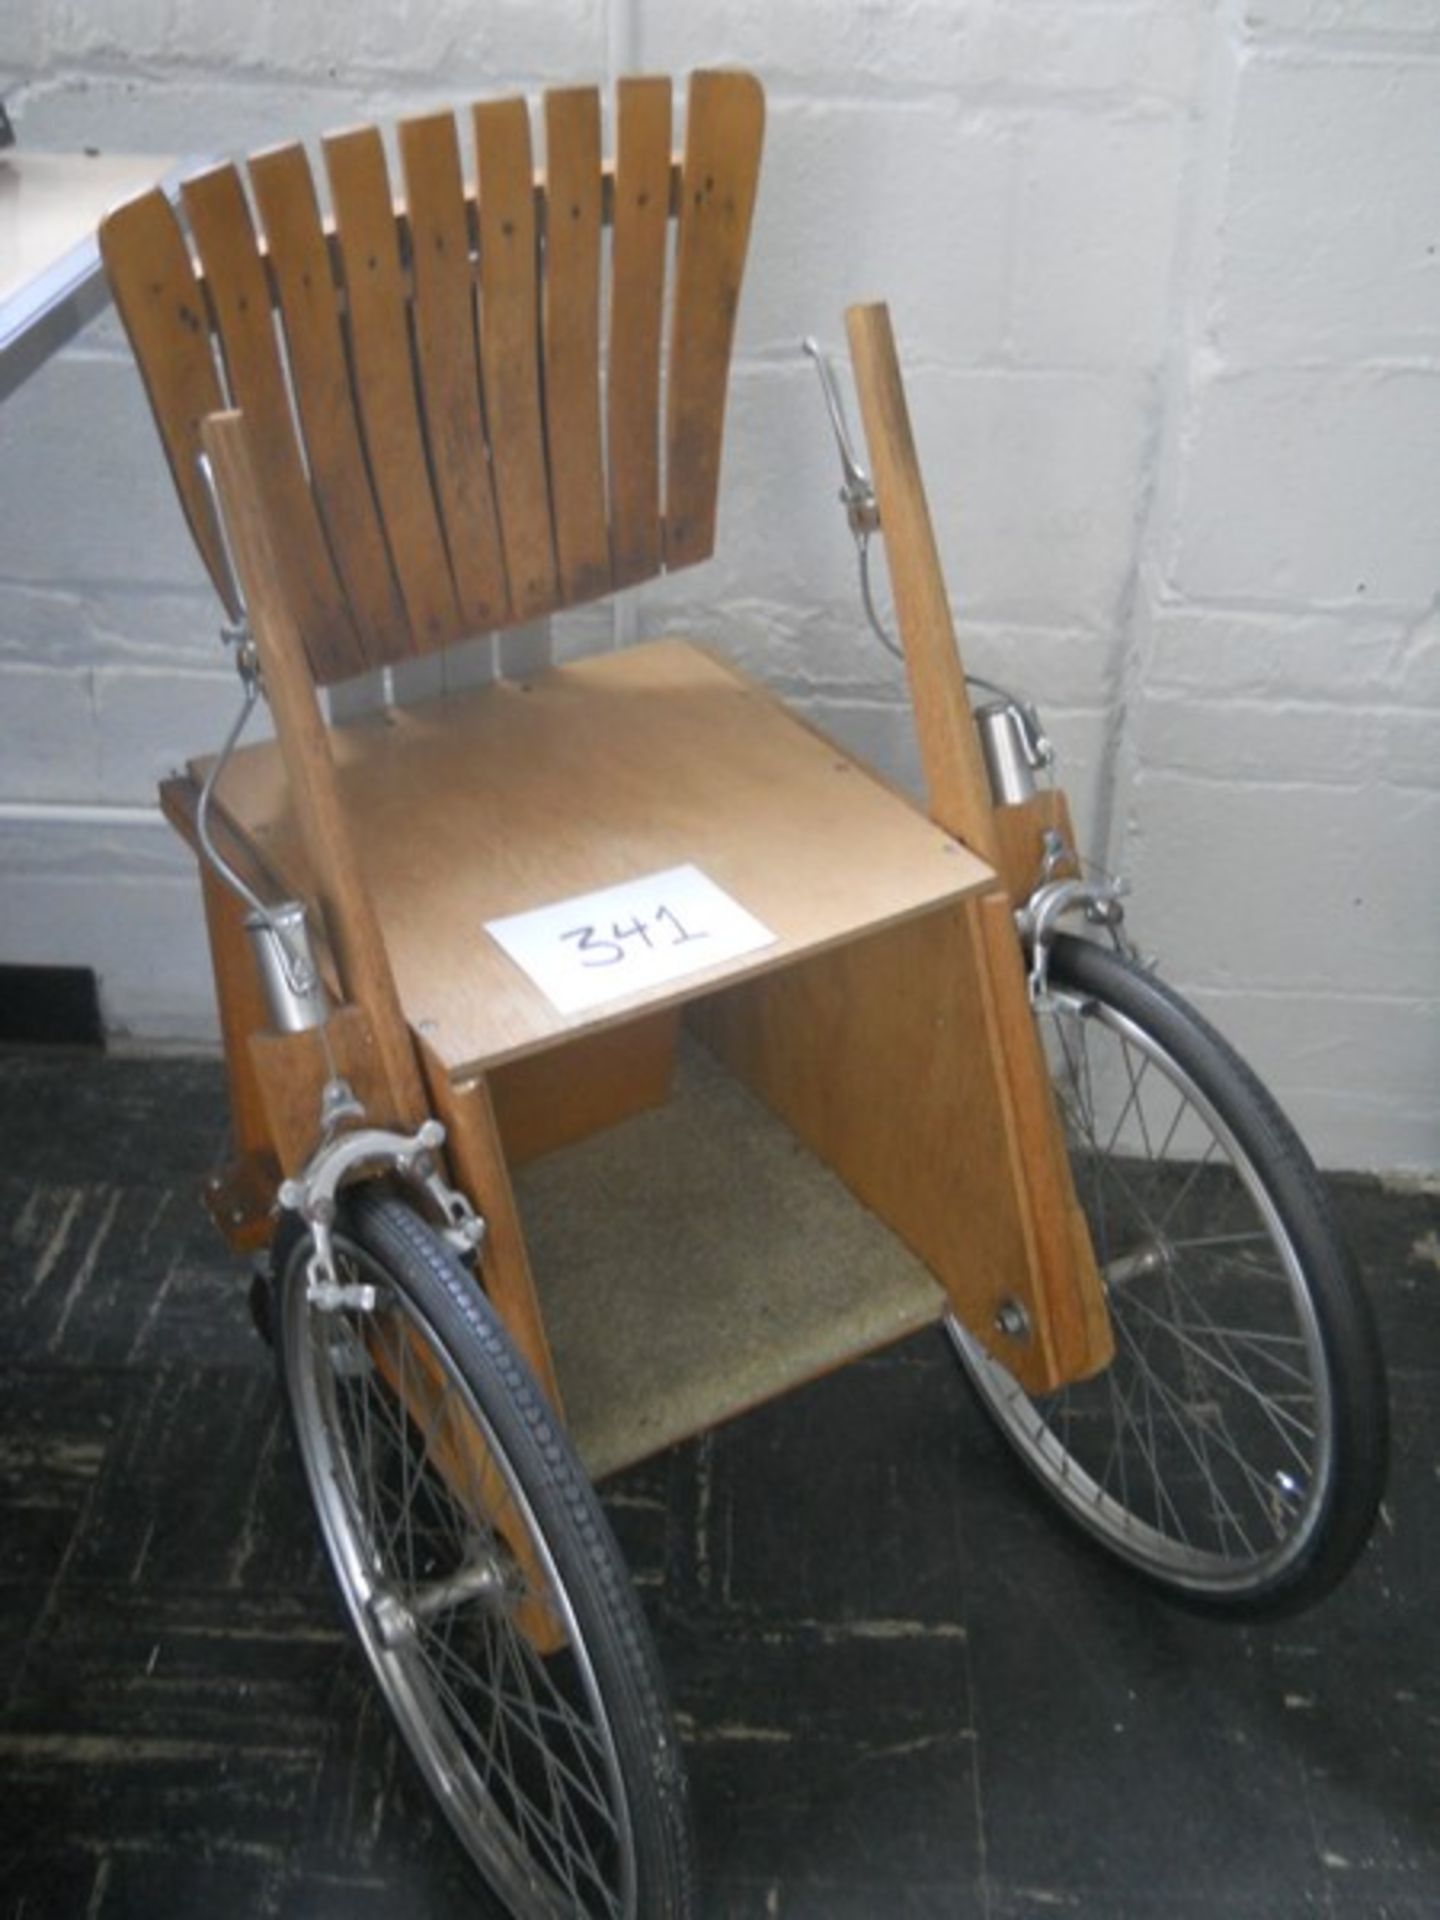 Shop Built Self Propelled Wheelchair (Includes Original Design Drawings)